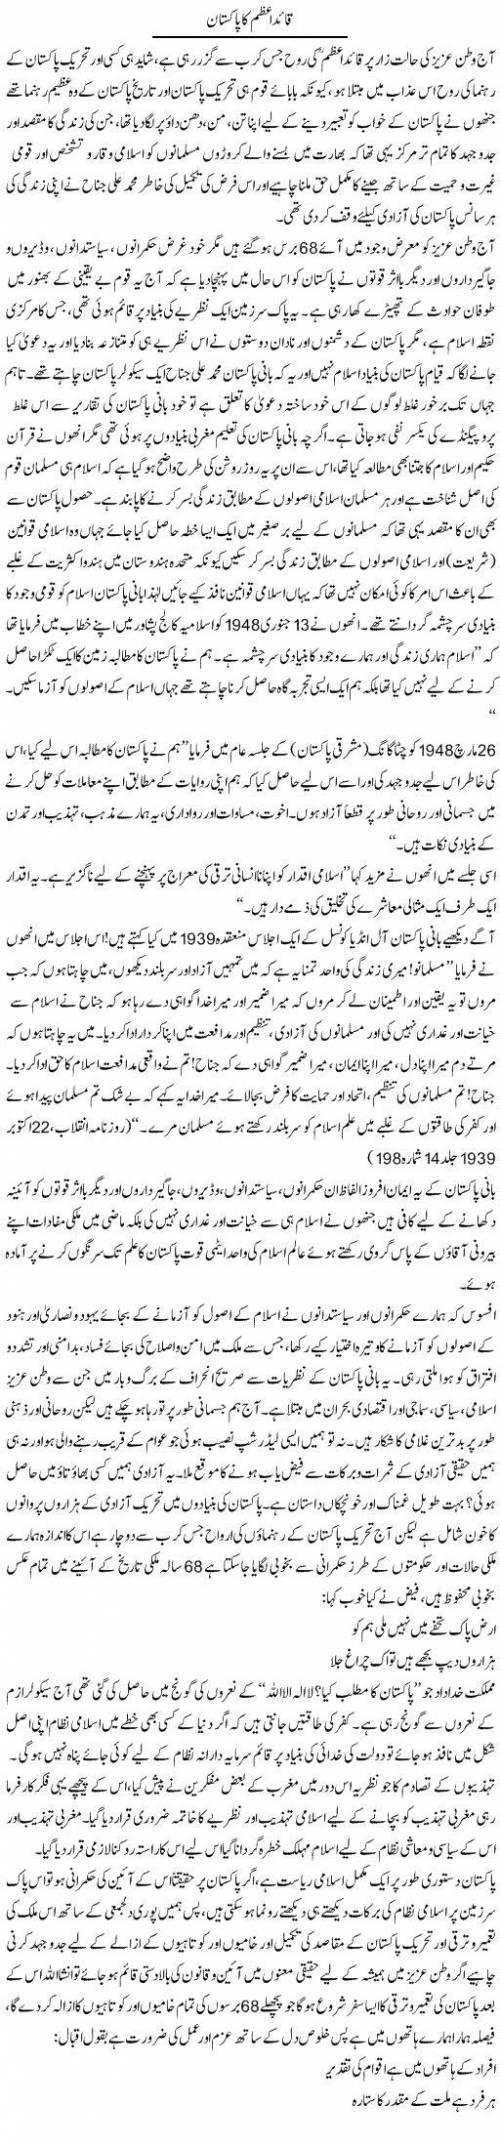 Write an urdu essay on Quaid Ka Pakistan.